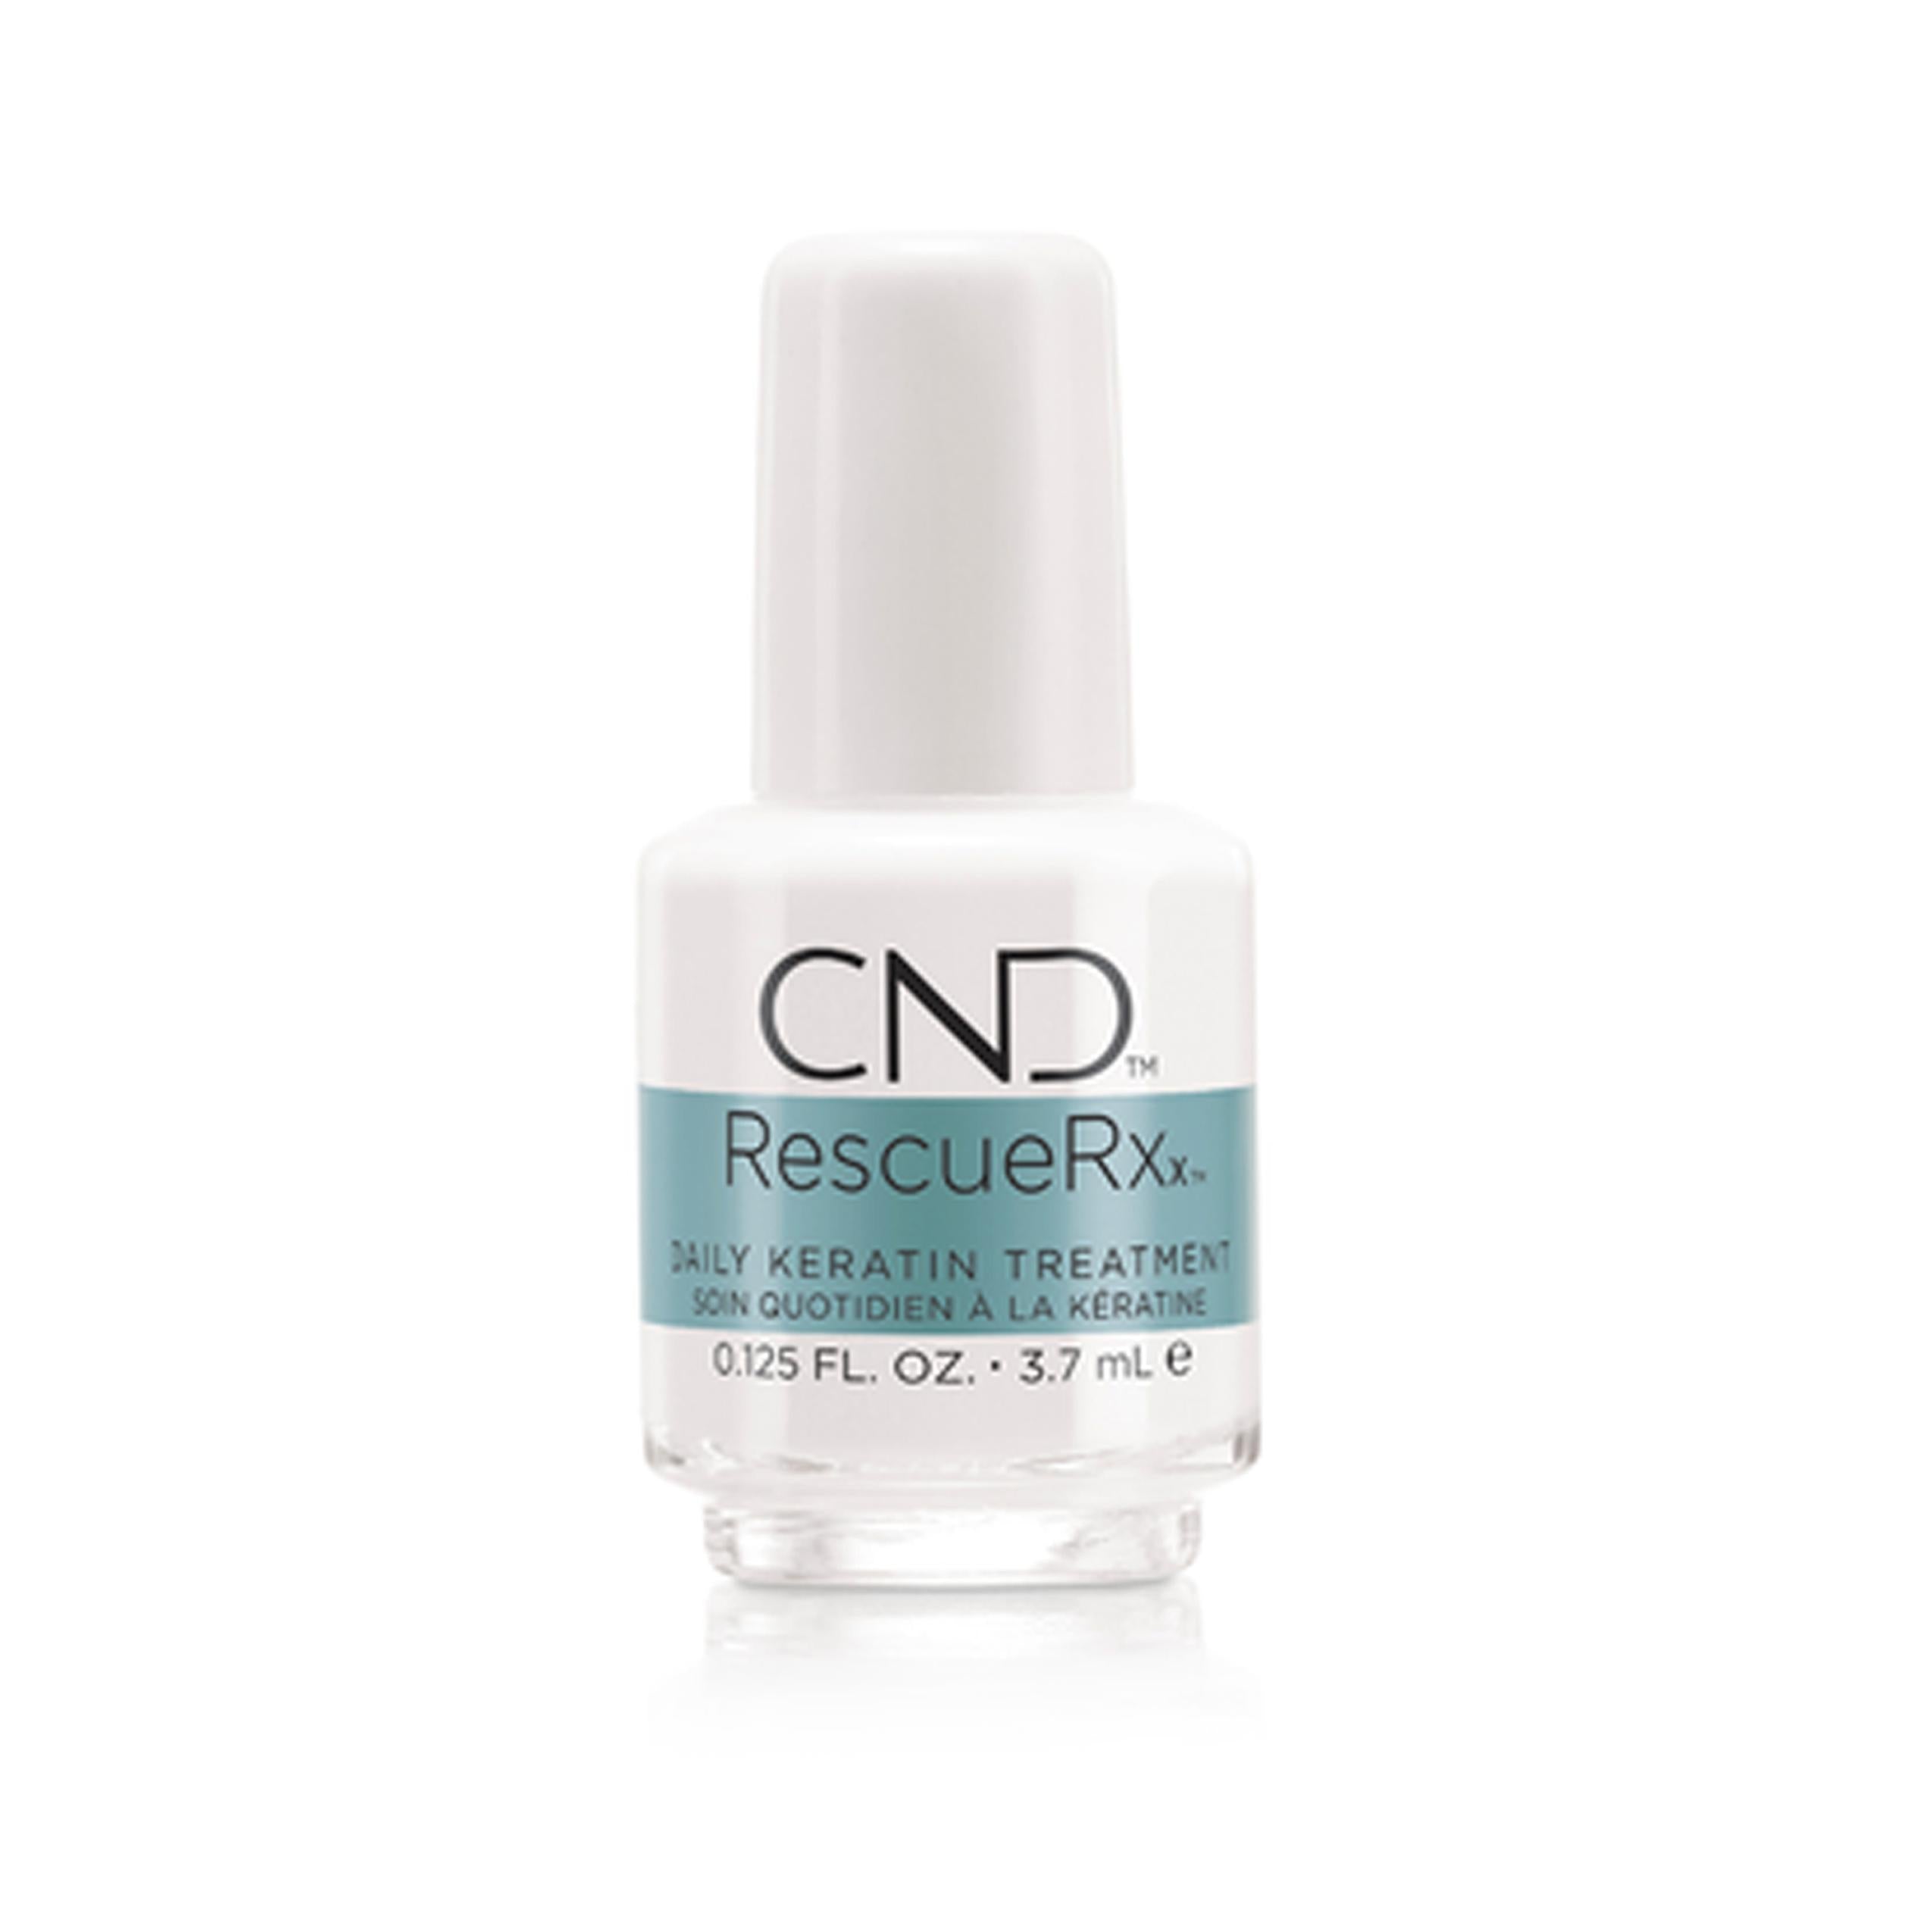 CND - Rescue RXX 0.125 oz - Nail Treatment at Beyond Polish